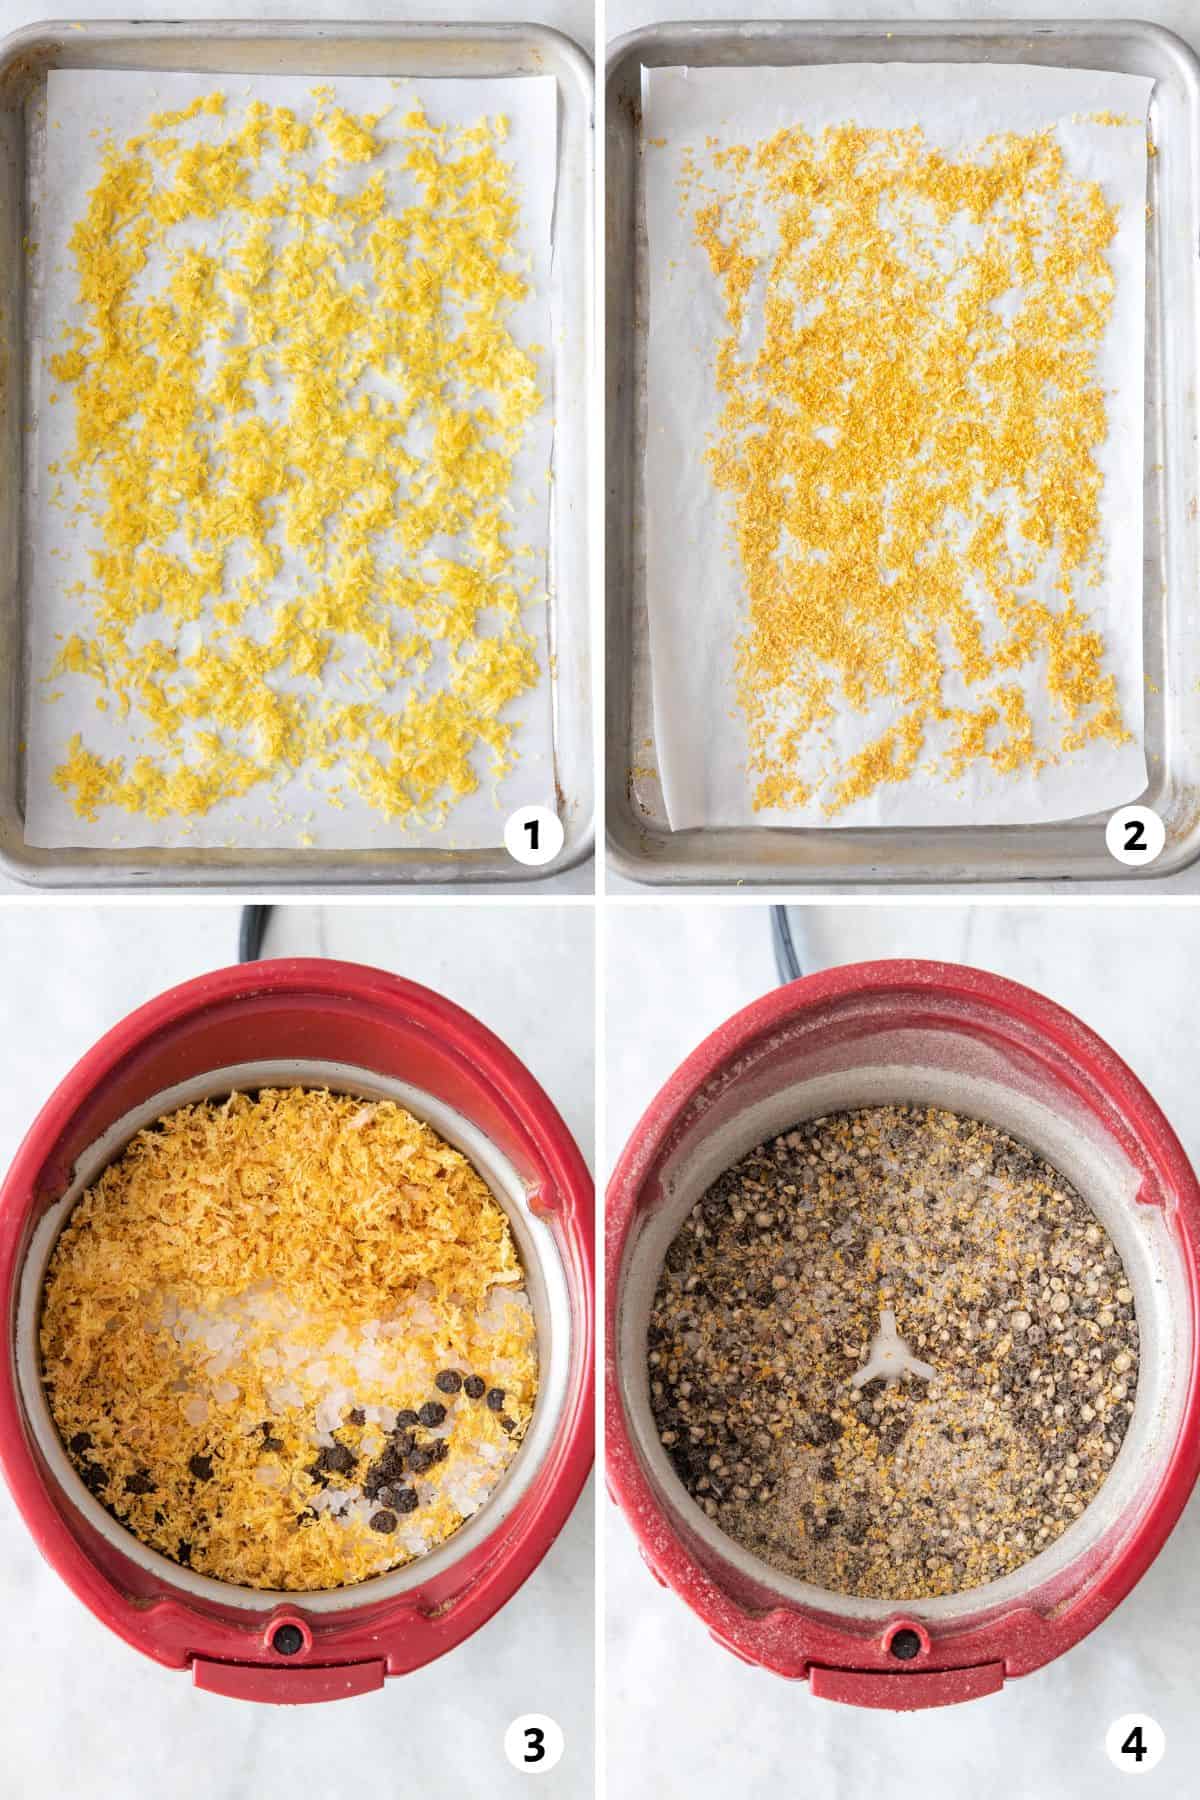 4 image collage making recipe: 1- fresh lemon zest on a parchment lined baking sheet, 2- lemon zest after drying, 3- ingredients in a spice grinder, 4- spice after grinding.